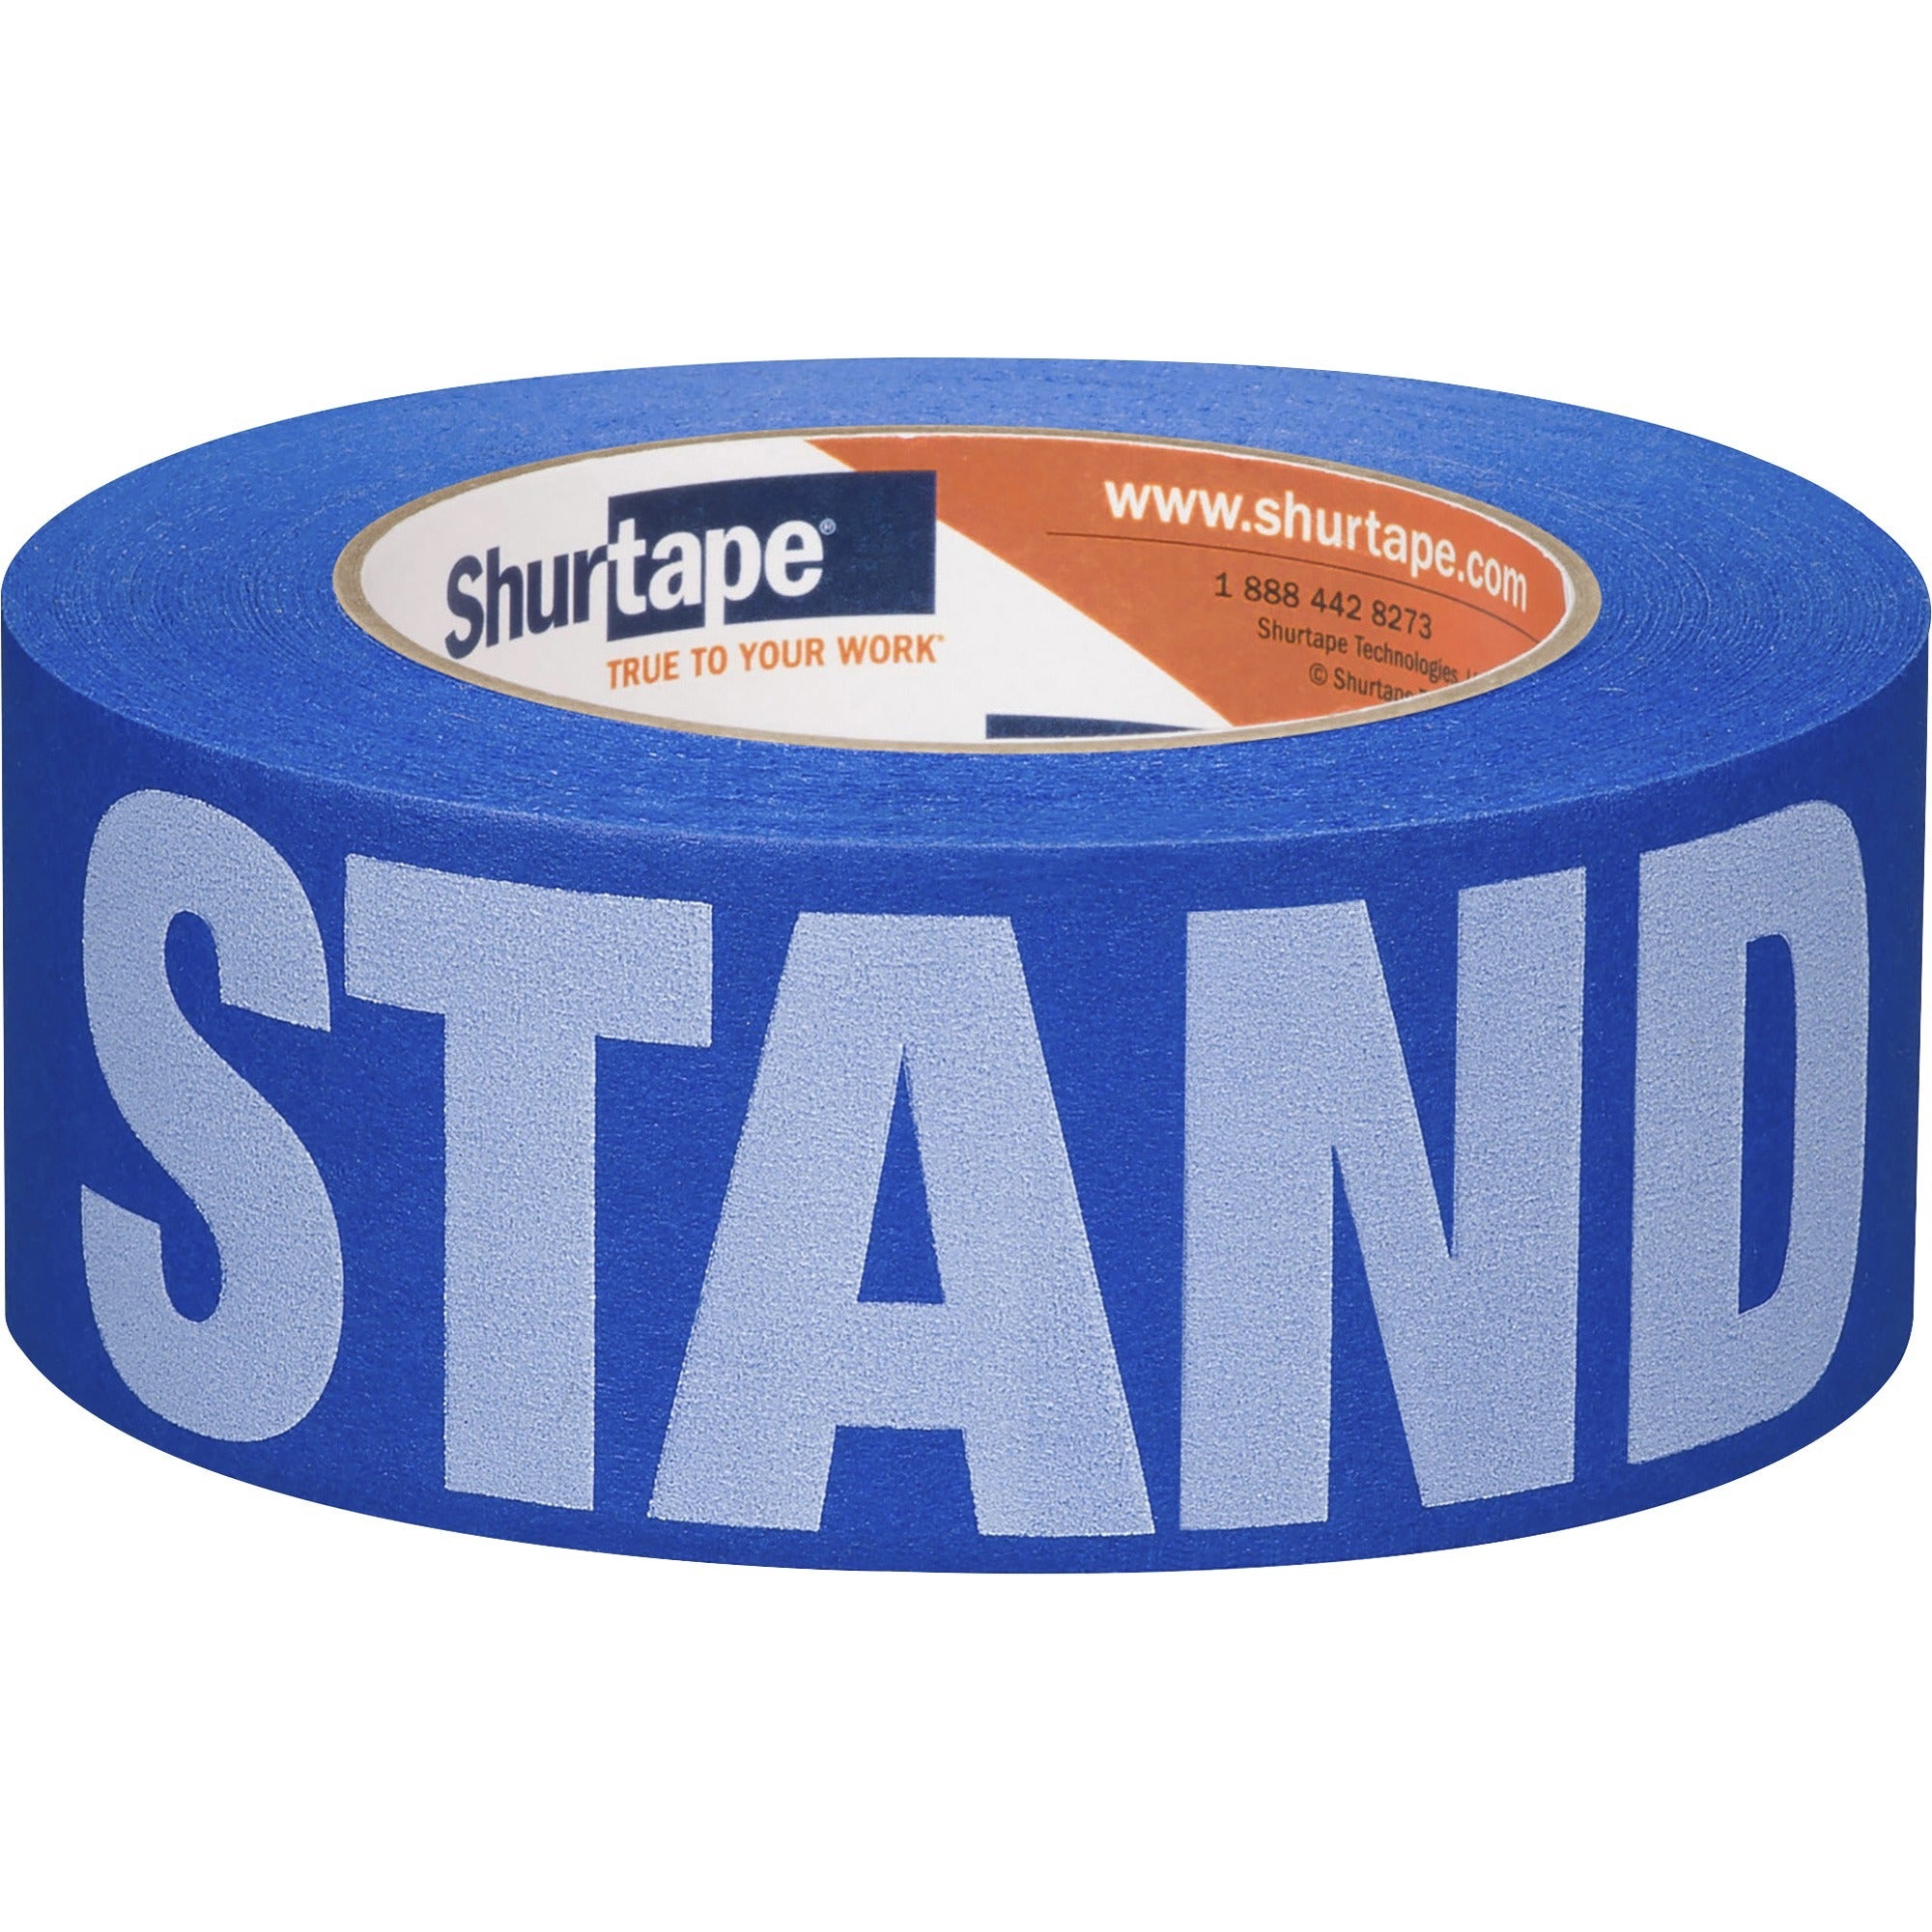 duck-stand-here-floor-marking-tape-60-yd-length-x-188-width-1-roll-100-per-roll-blue_duc105156 - 2